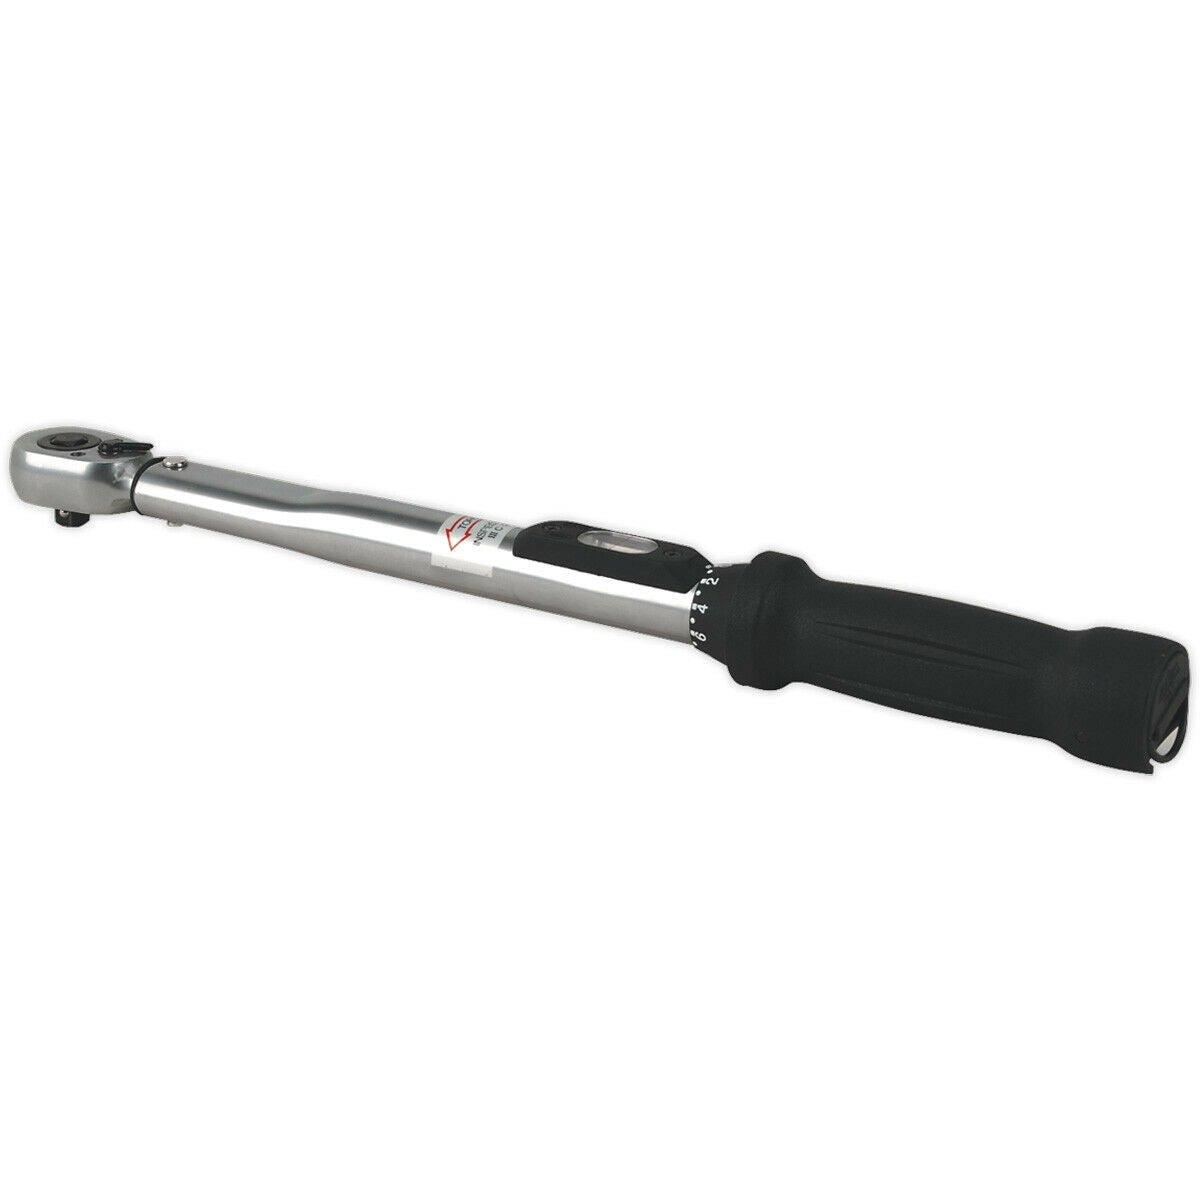 Locking Micrometer Torque Wrench - 3/8